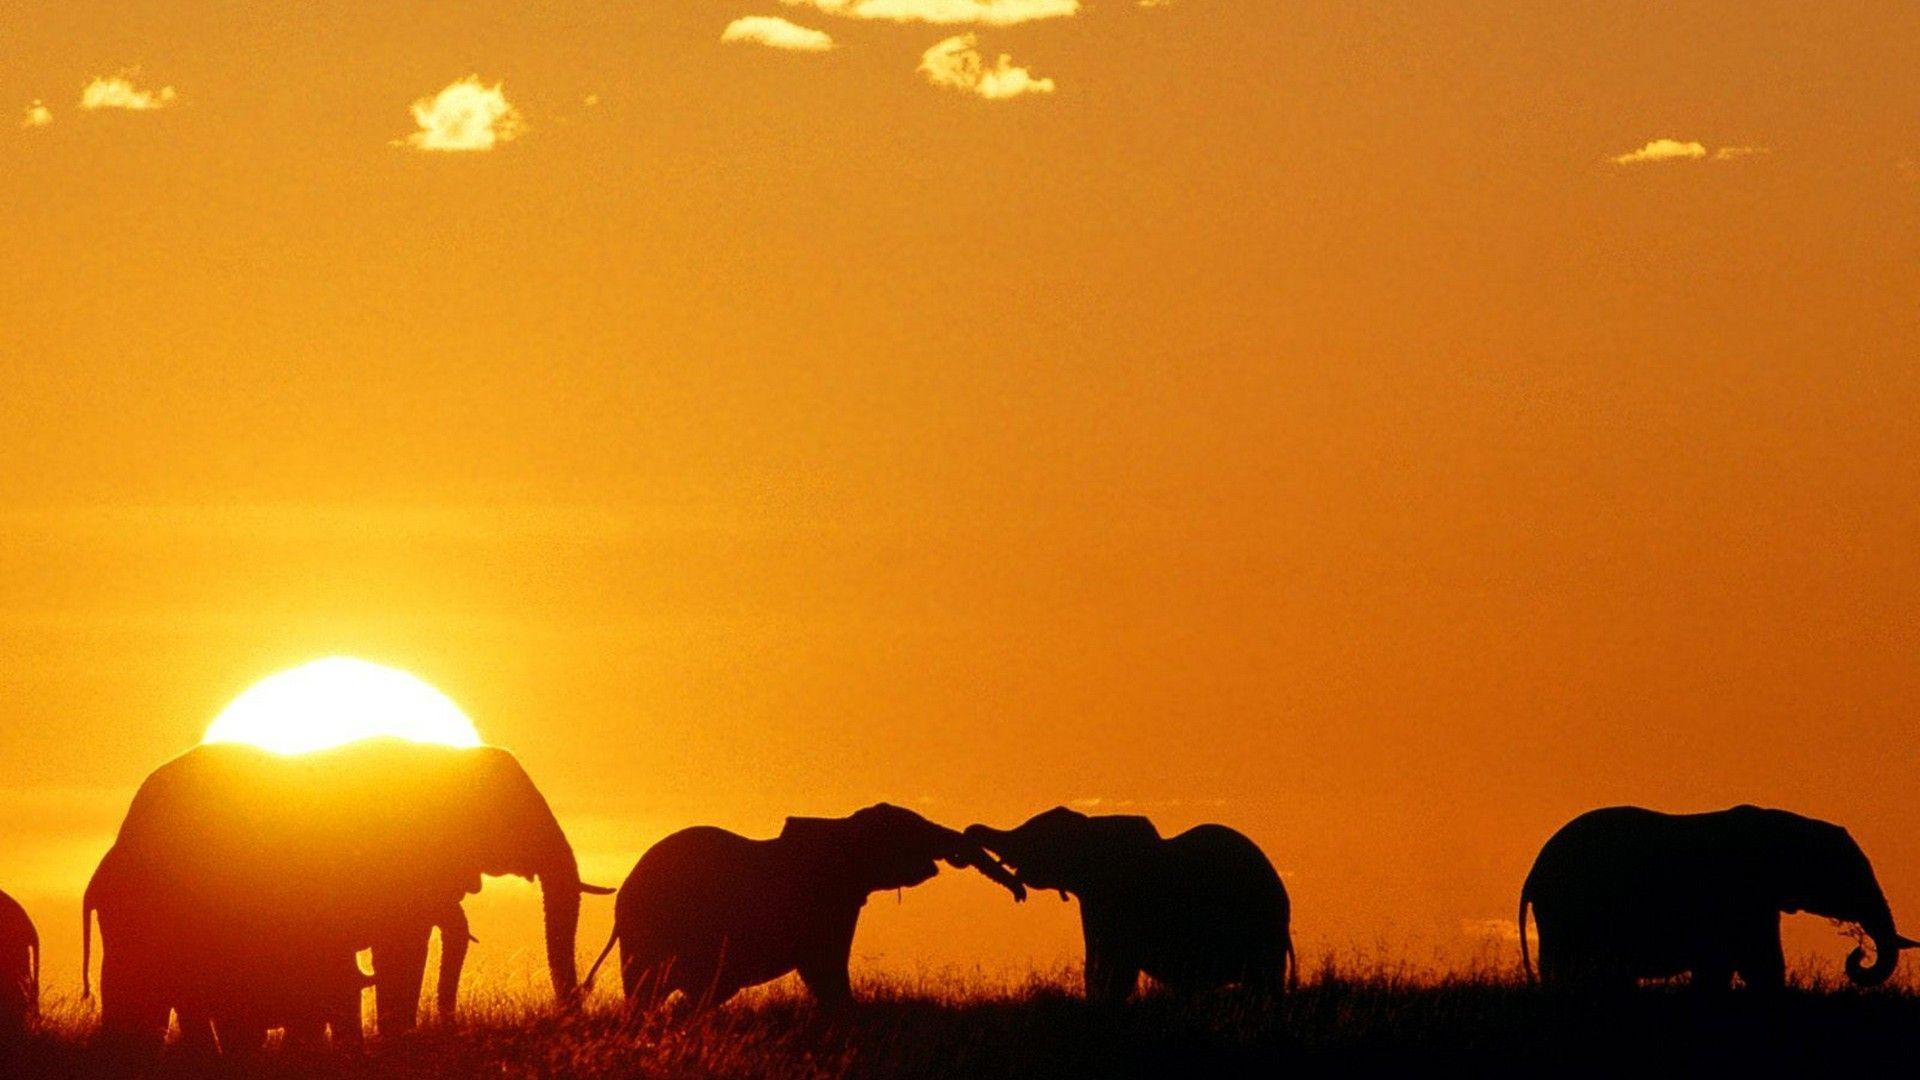 Elephants Sunset Wallpaper Image 6 HD Wallpaper. Eakai